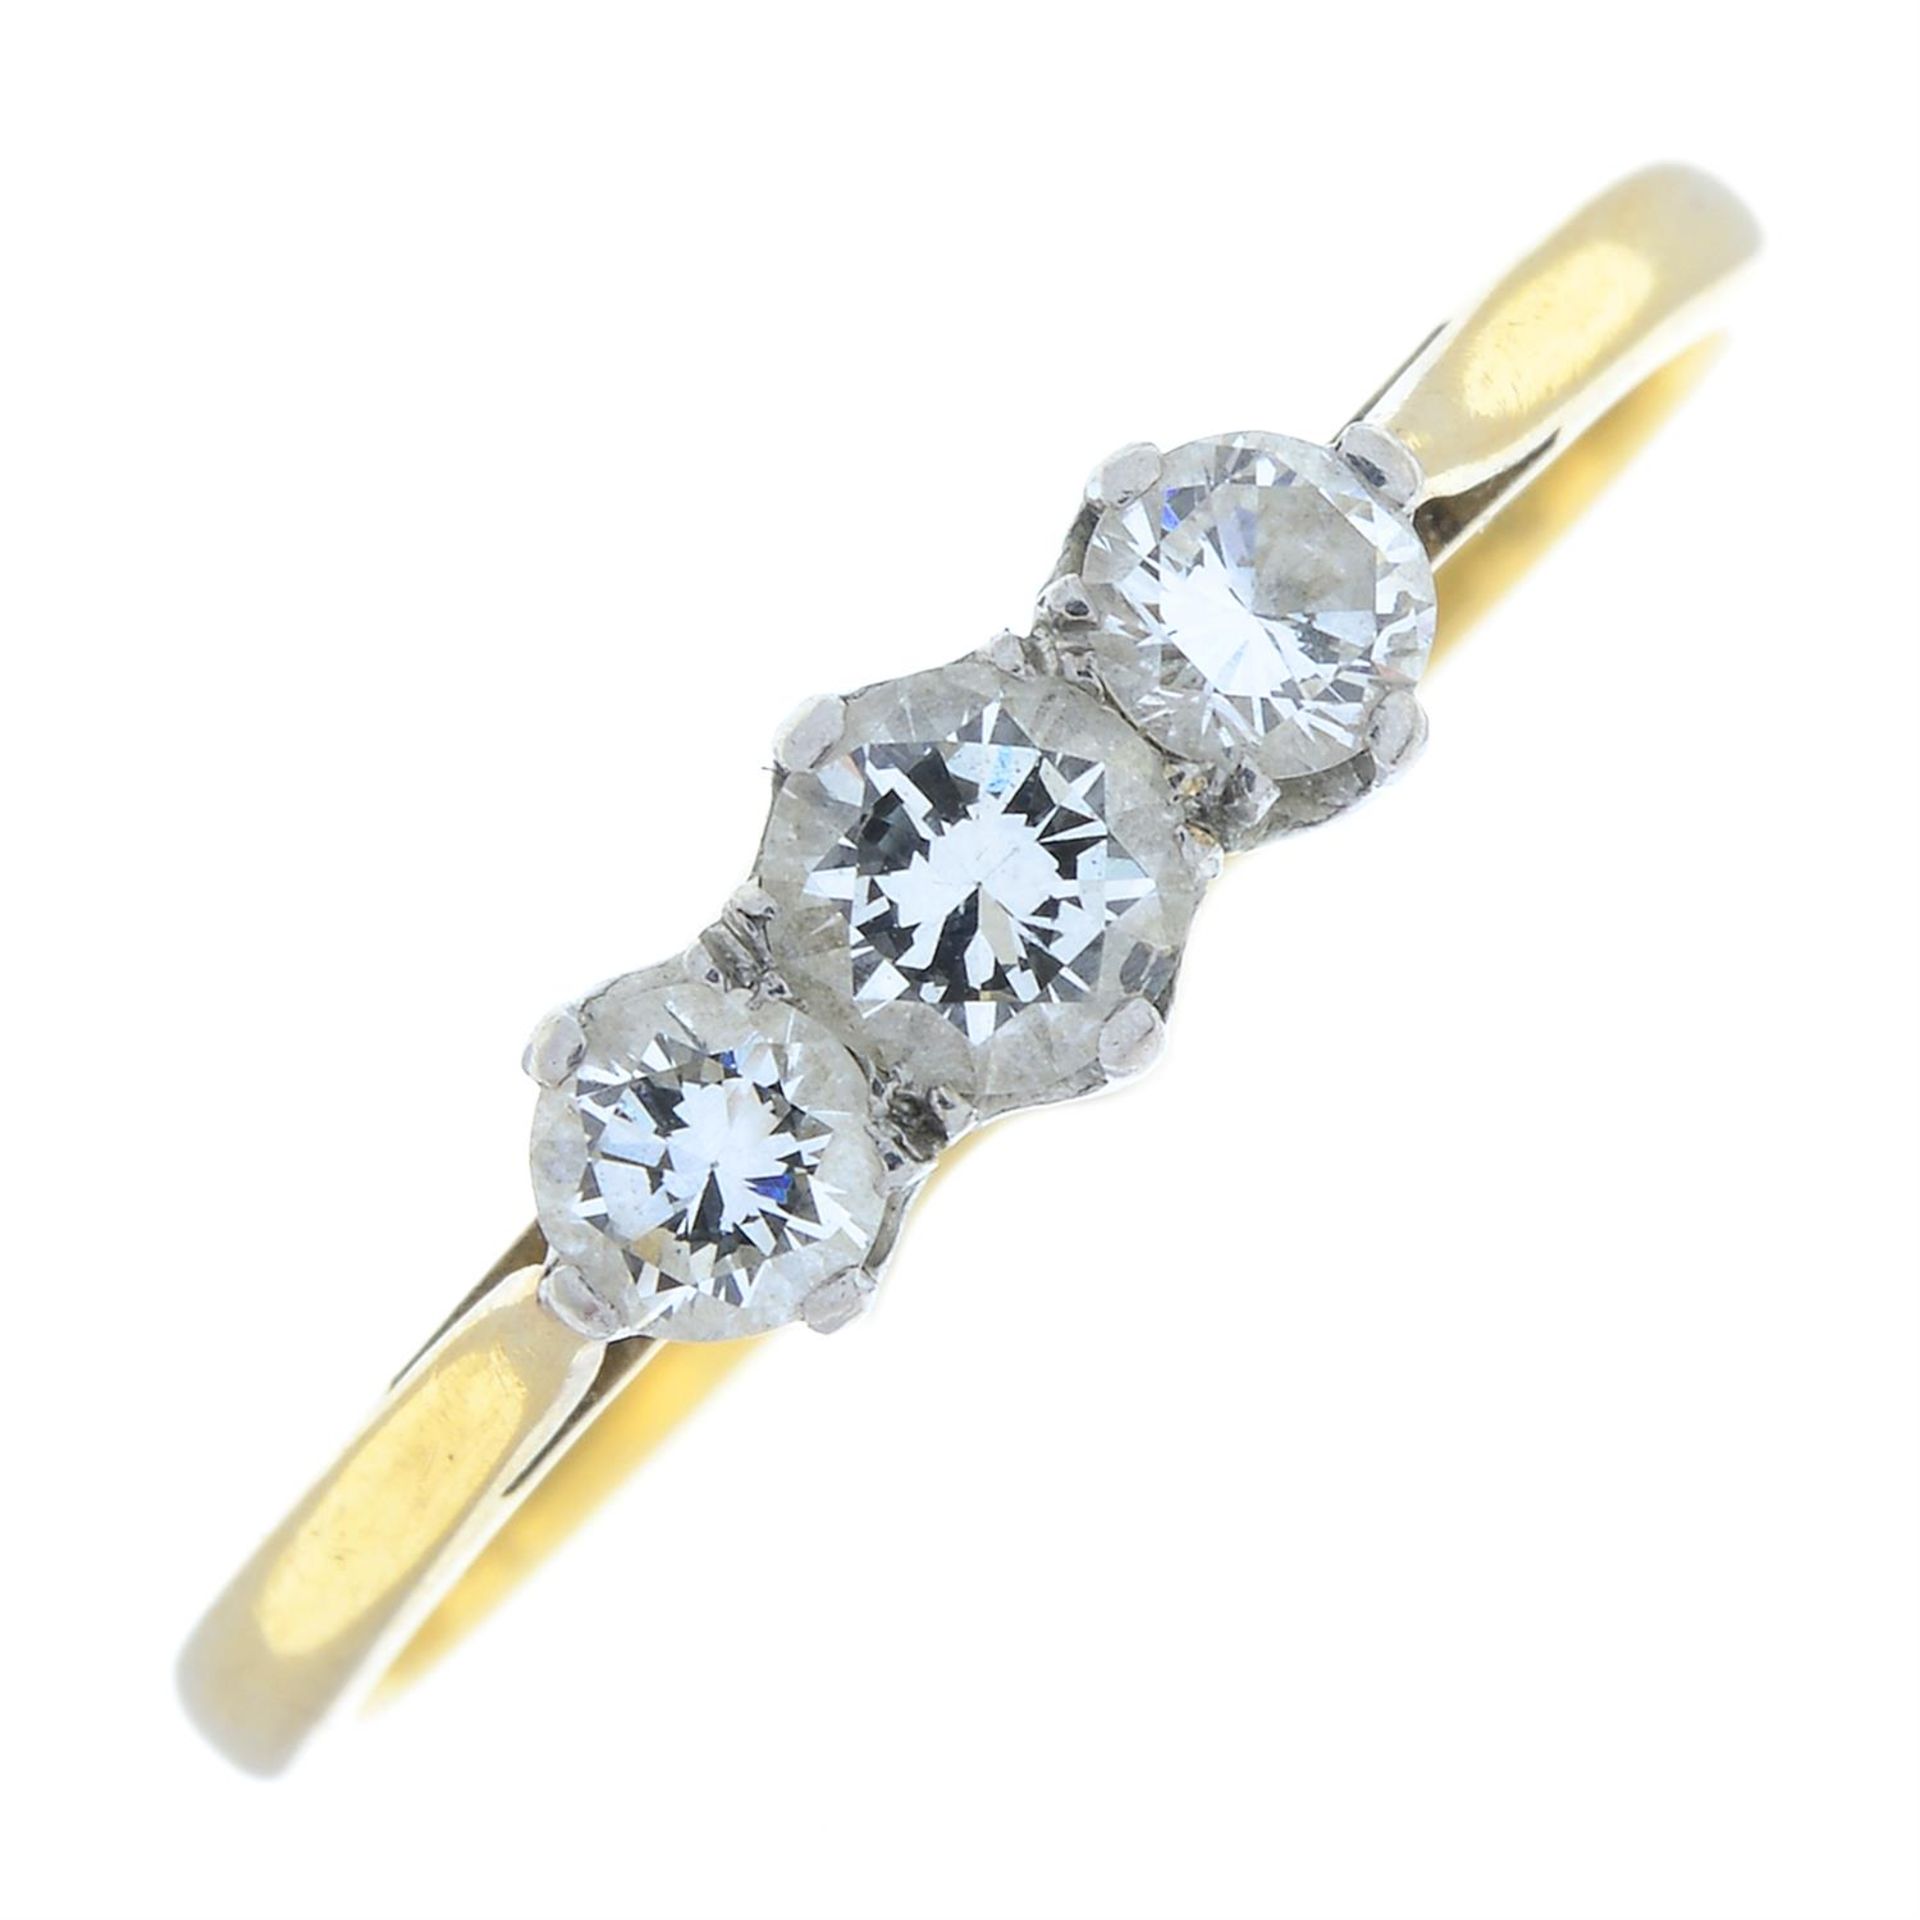 A brilliant-cut diamond three-stone ring.